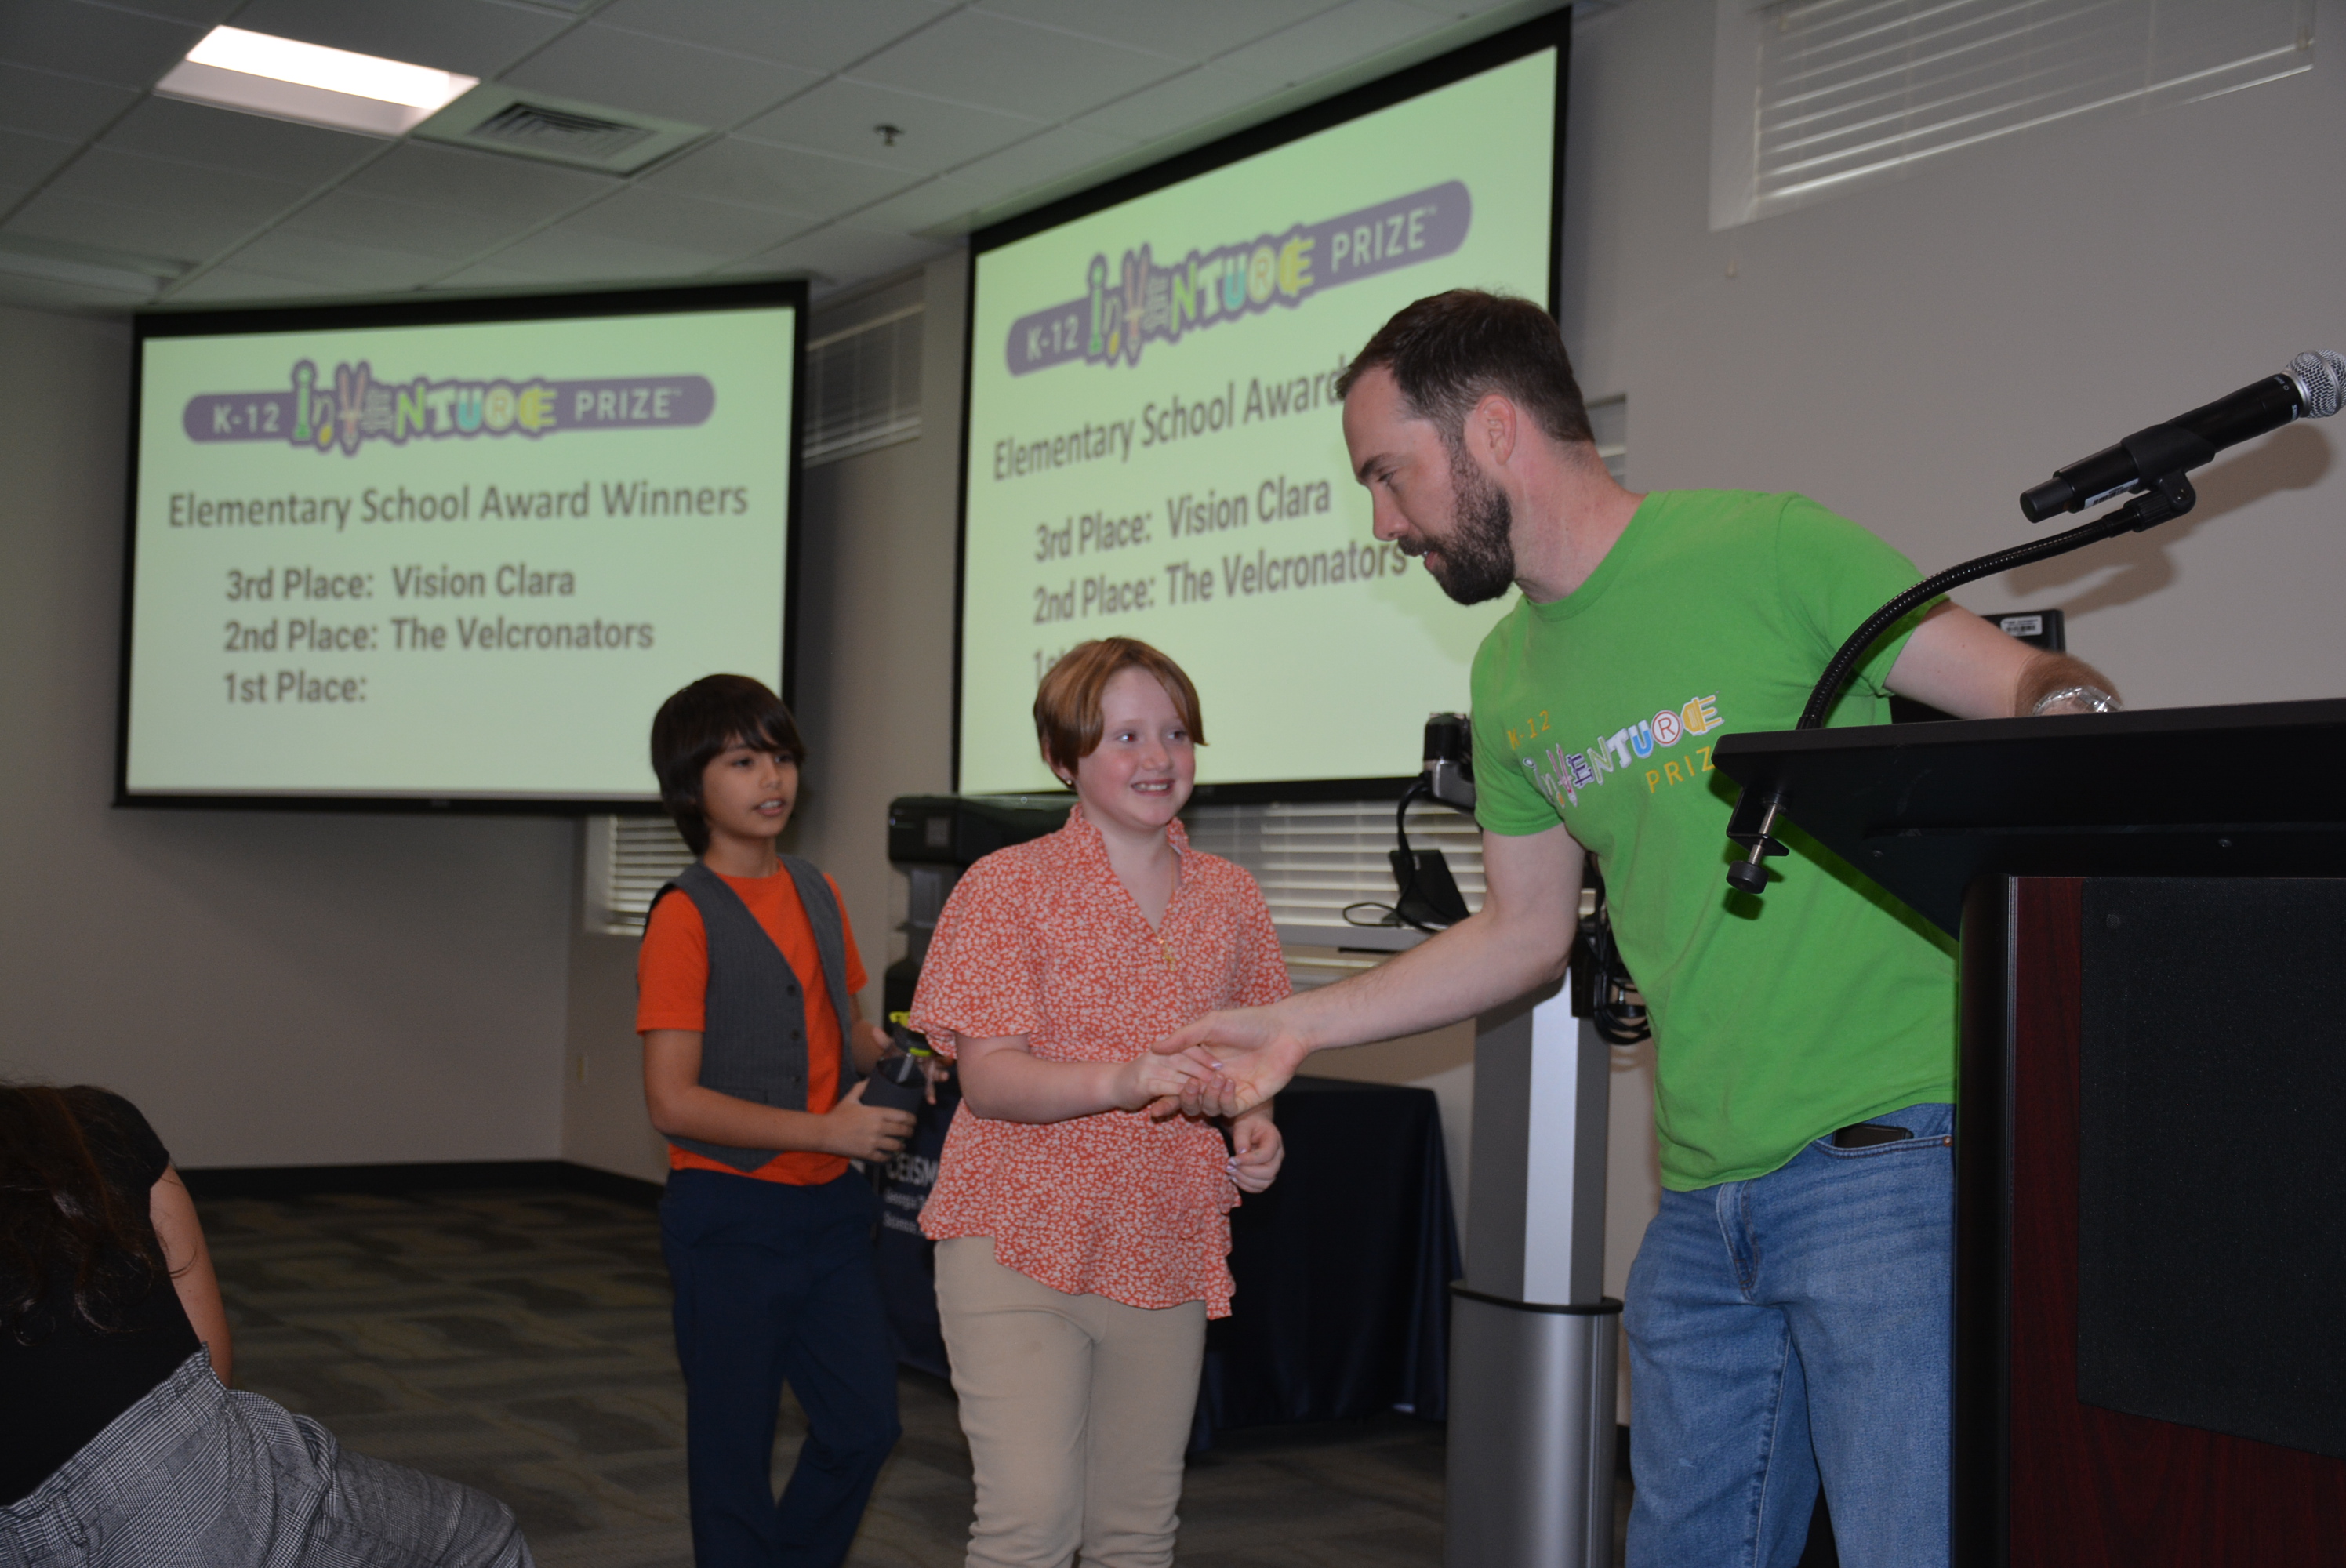 Students recieving award at K-12 InVenture Prize Awards Ceremony